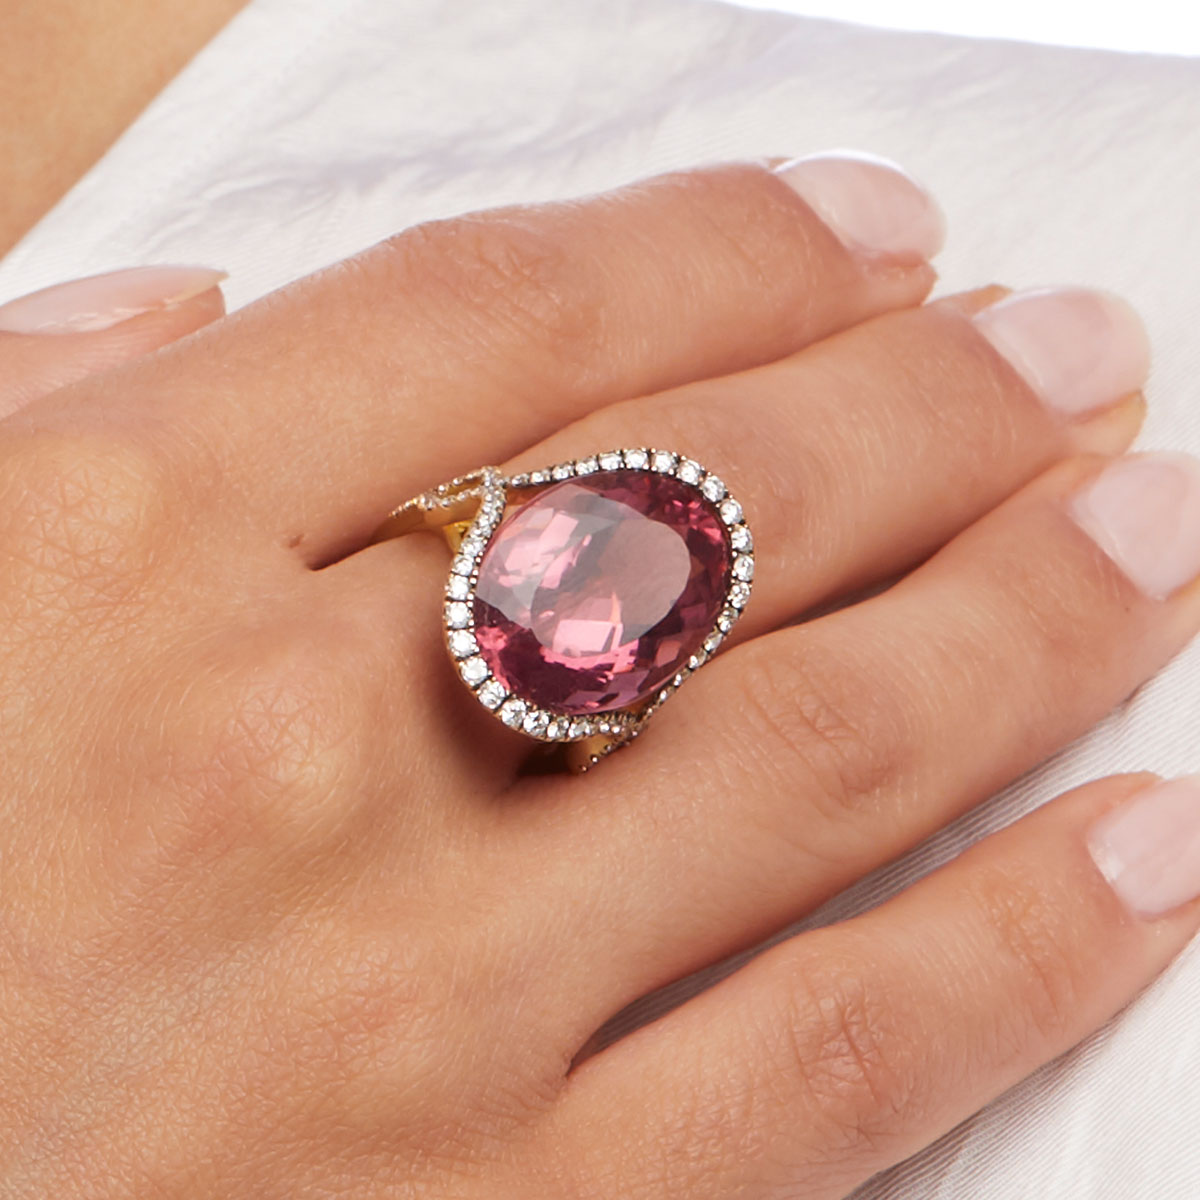 Baronessa Ring with Pink Tourmaline